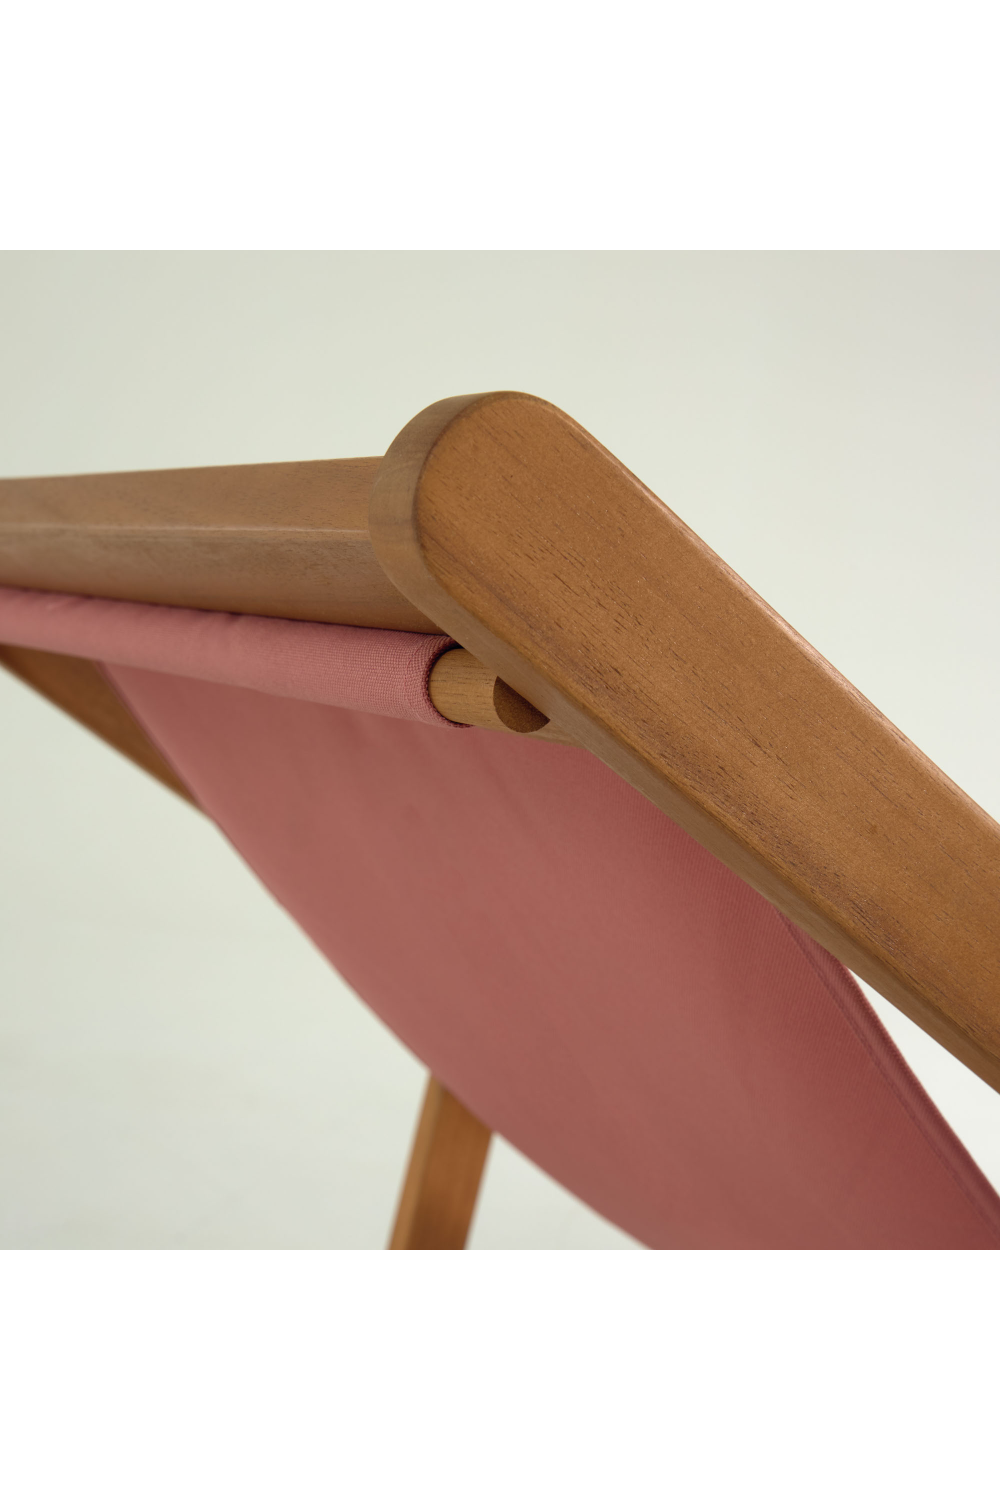 Acacia Outdoor Deck Chair | La Forma Adredna | Oroa.com